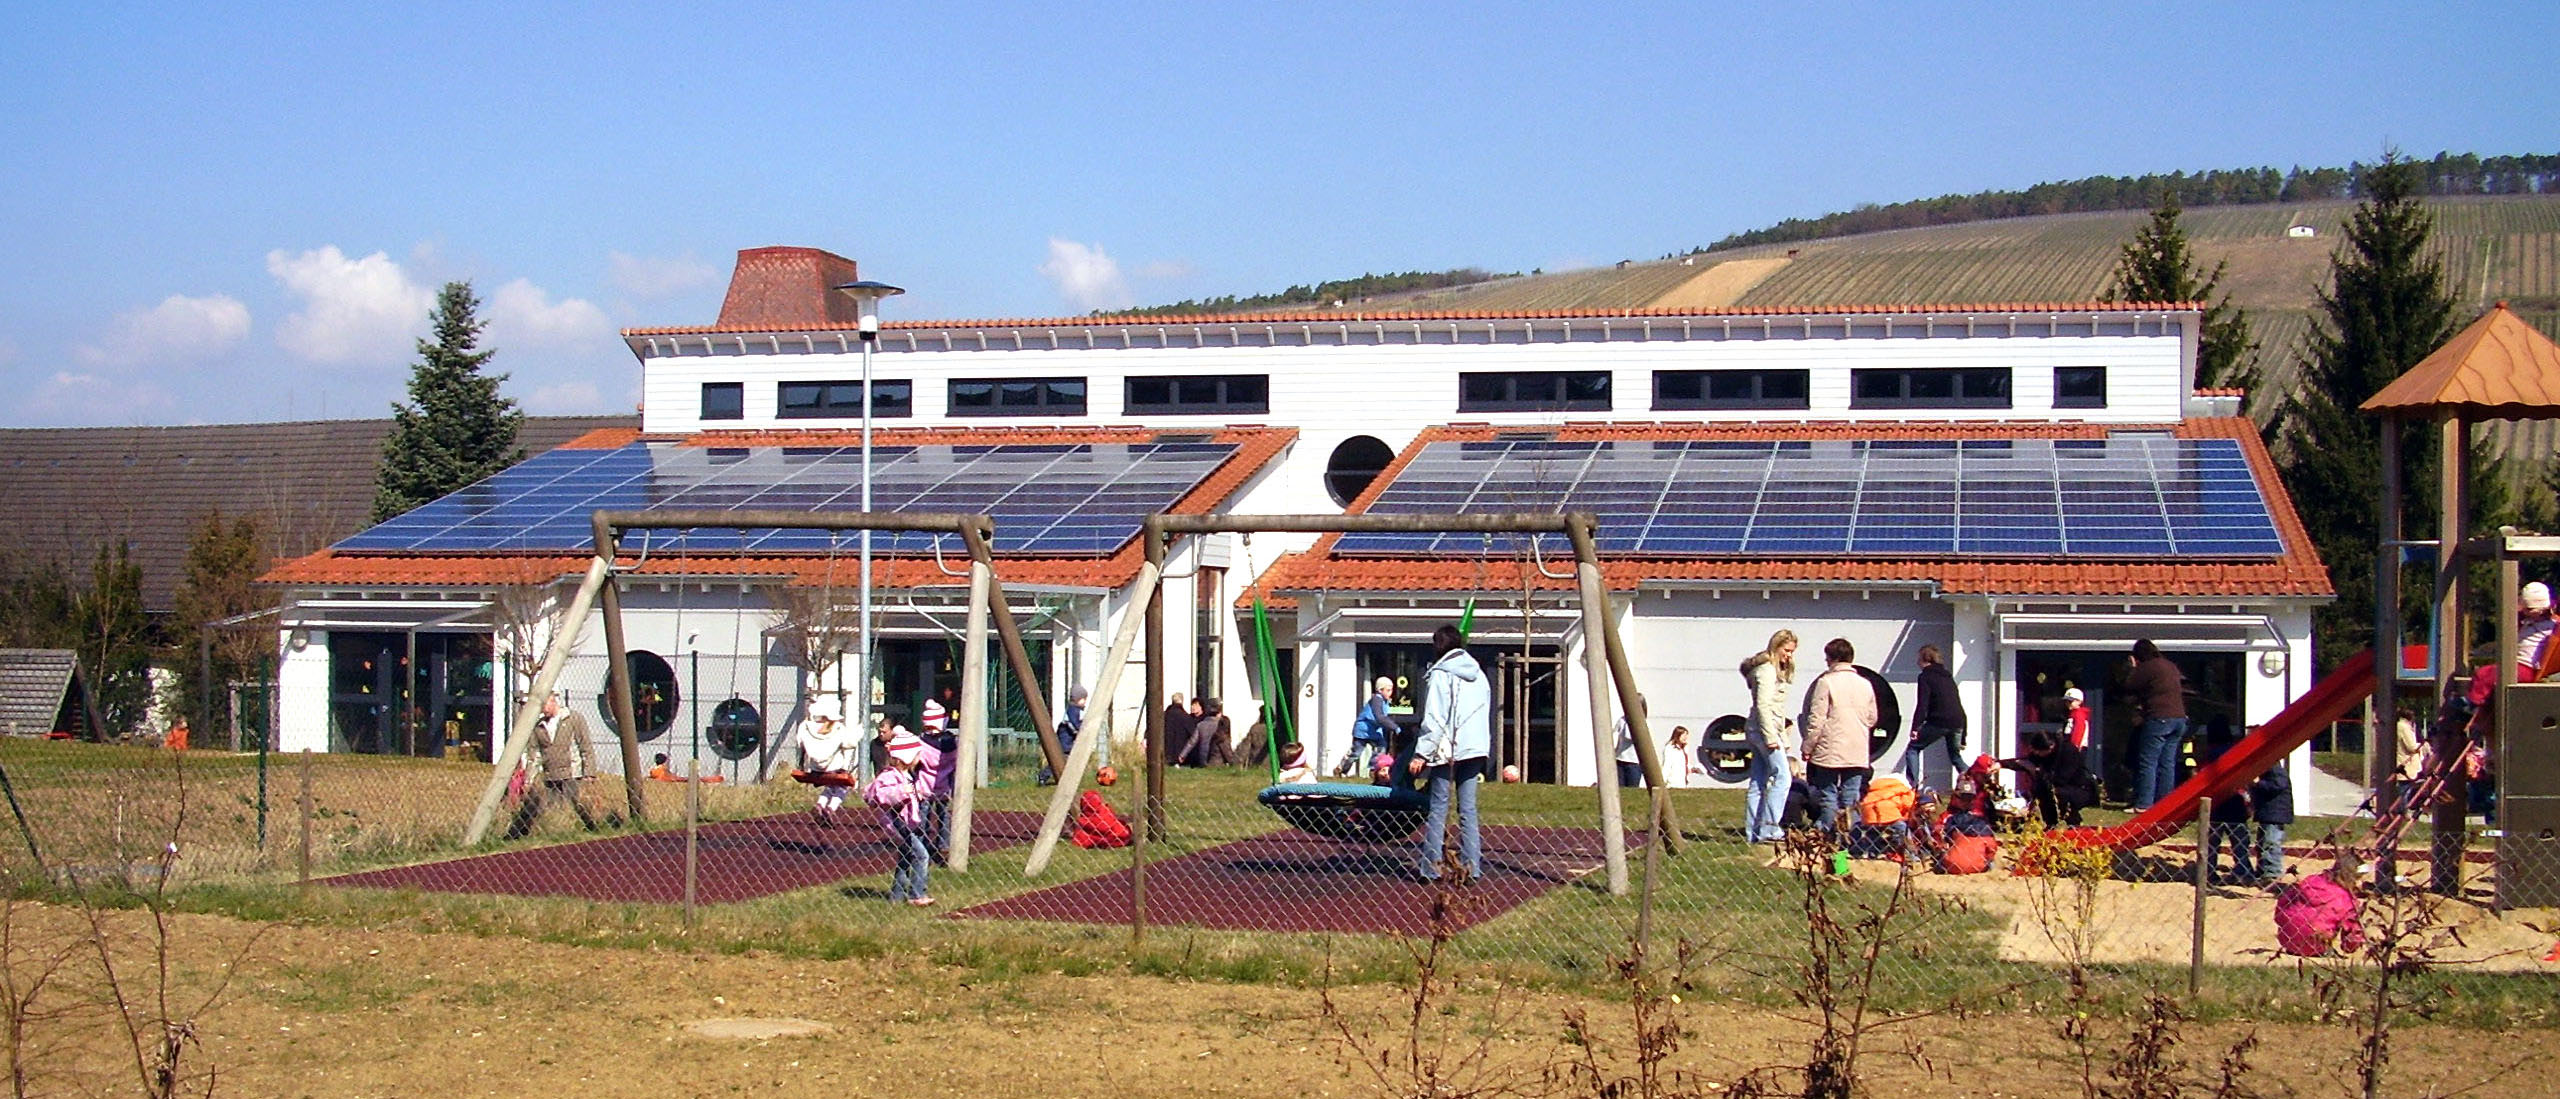 photovoltaikkindergarten